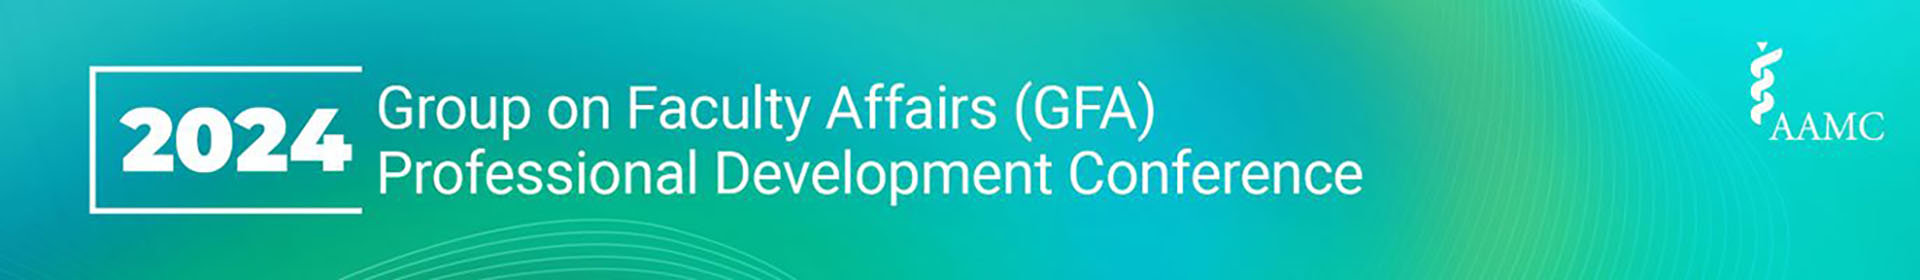 2024 GFA Professional Development Conference Event Banner